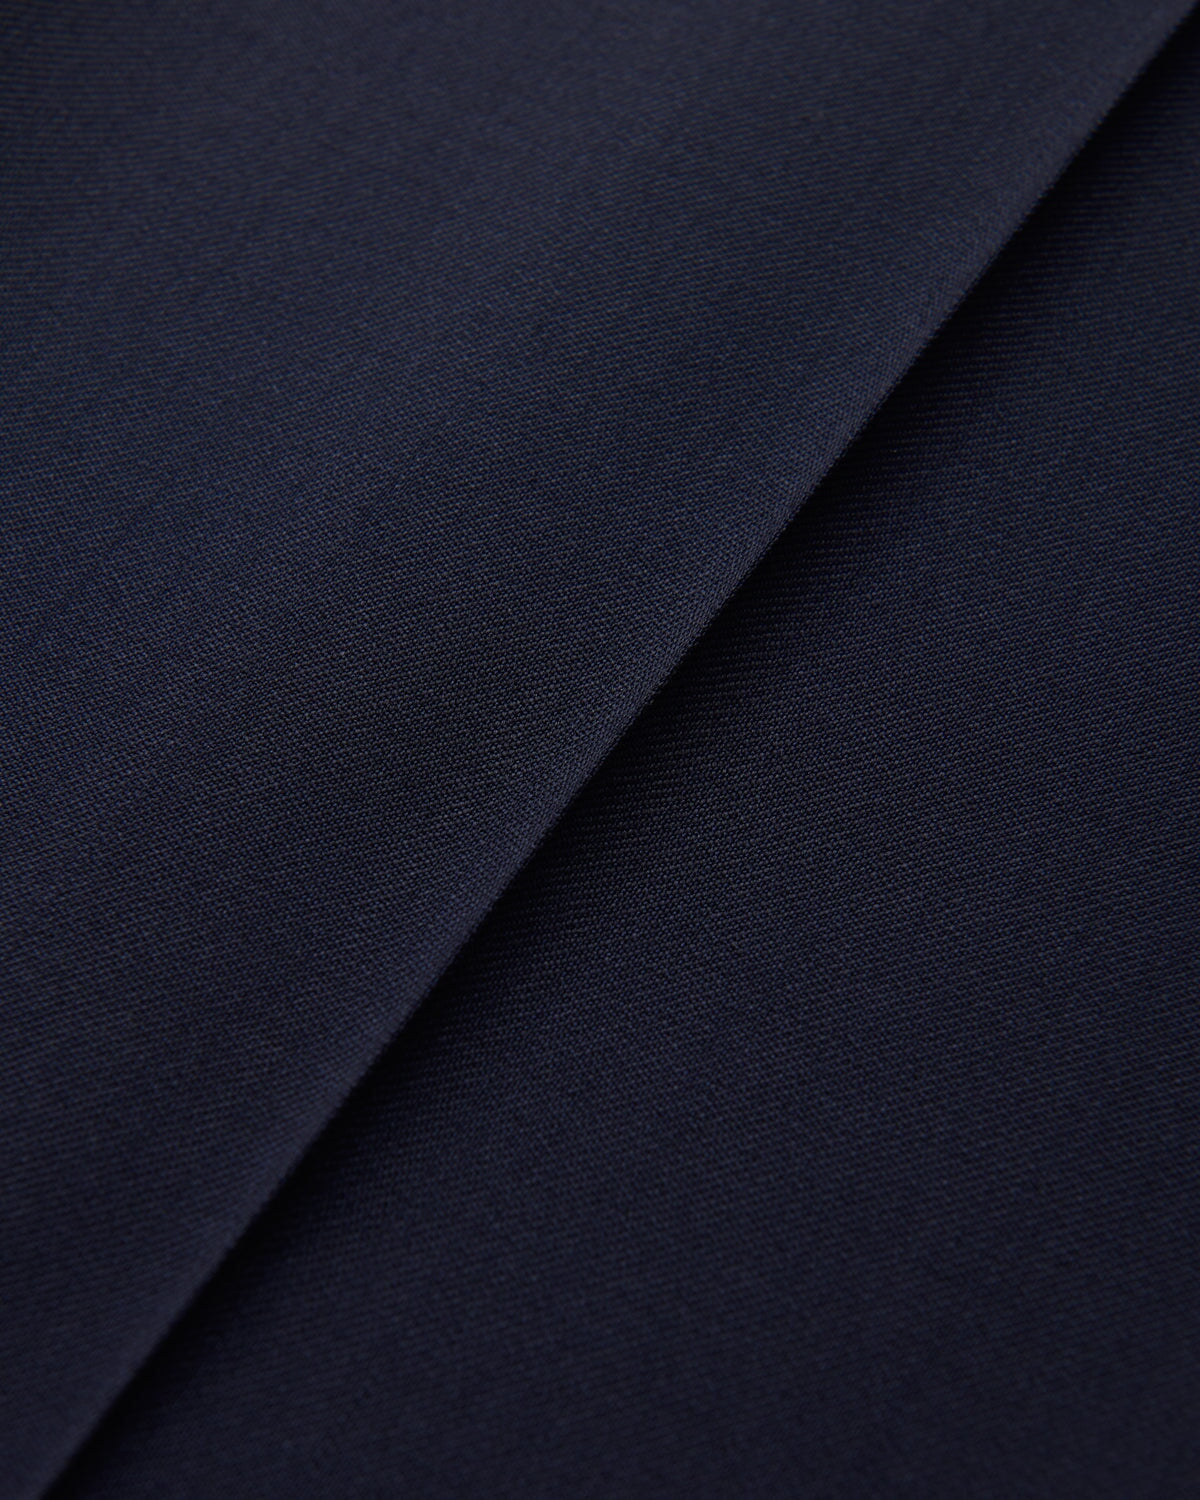 Kilgour Savile Row Tailoring SB1 KG Single Breasted Dark Navy Twill Suit